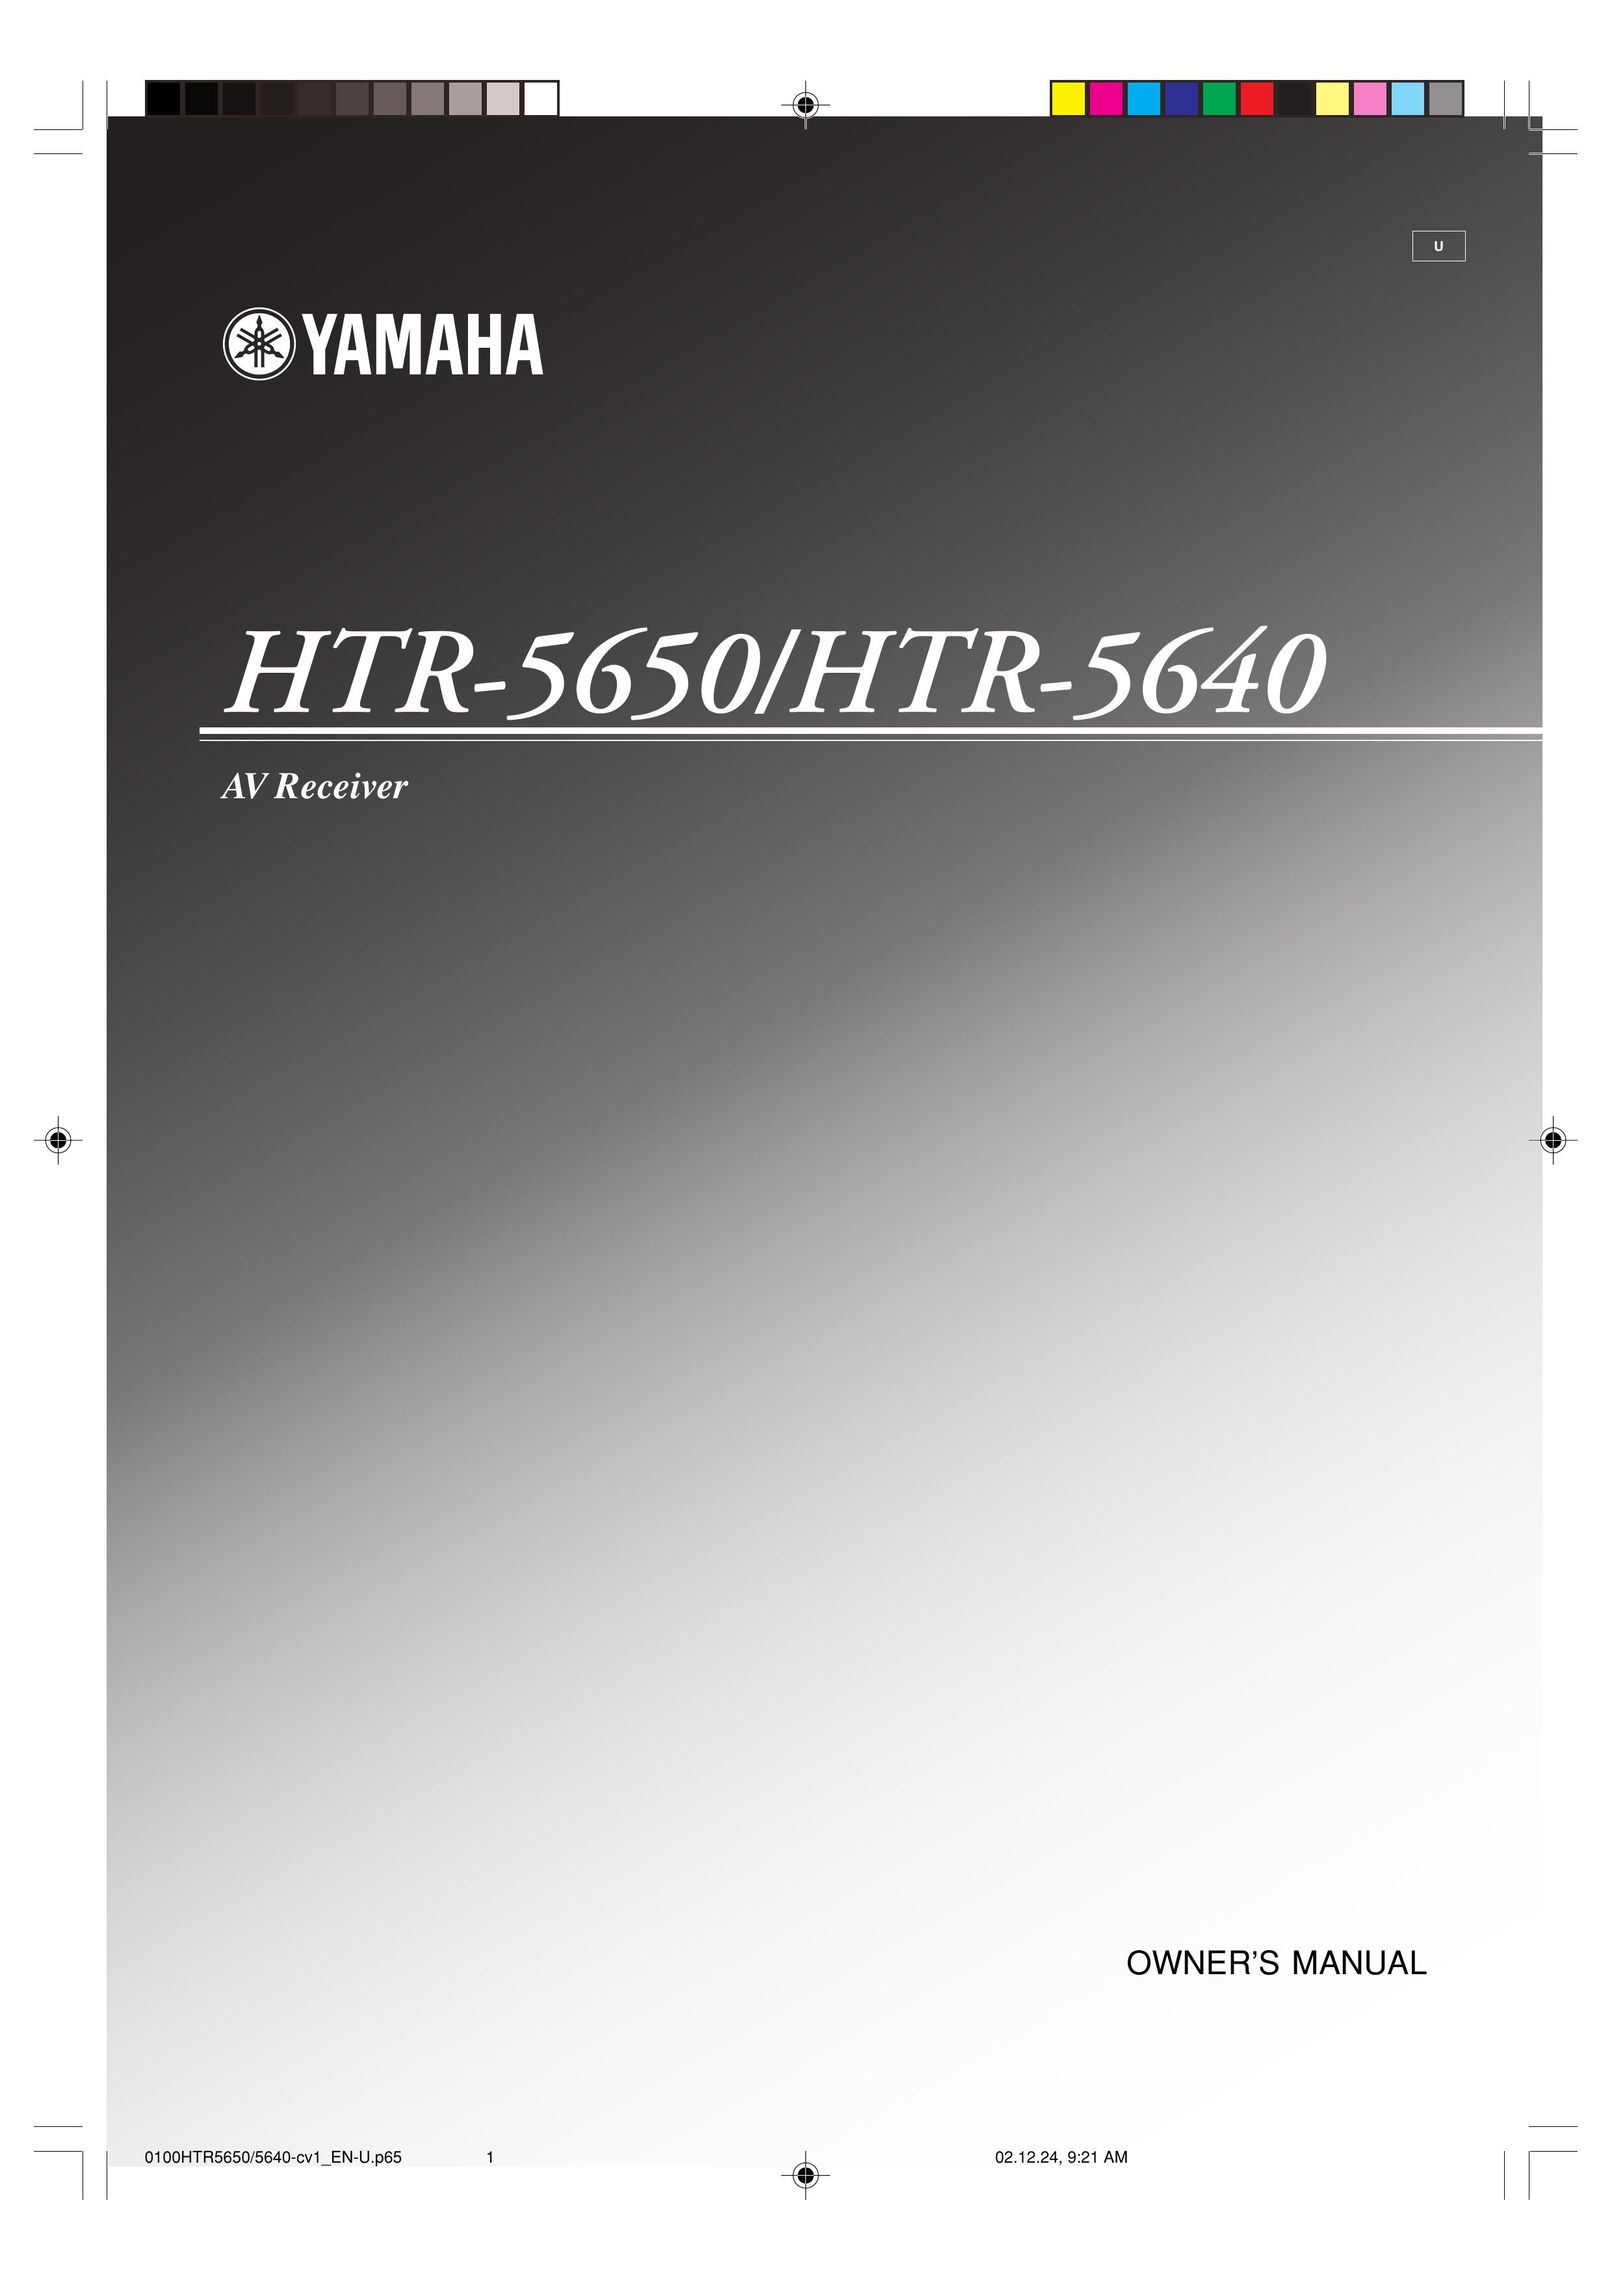 Yamaha HTR-5640 Stereo Receiver User Manual